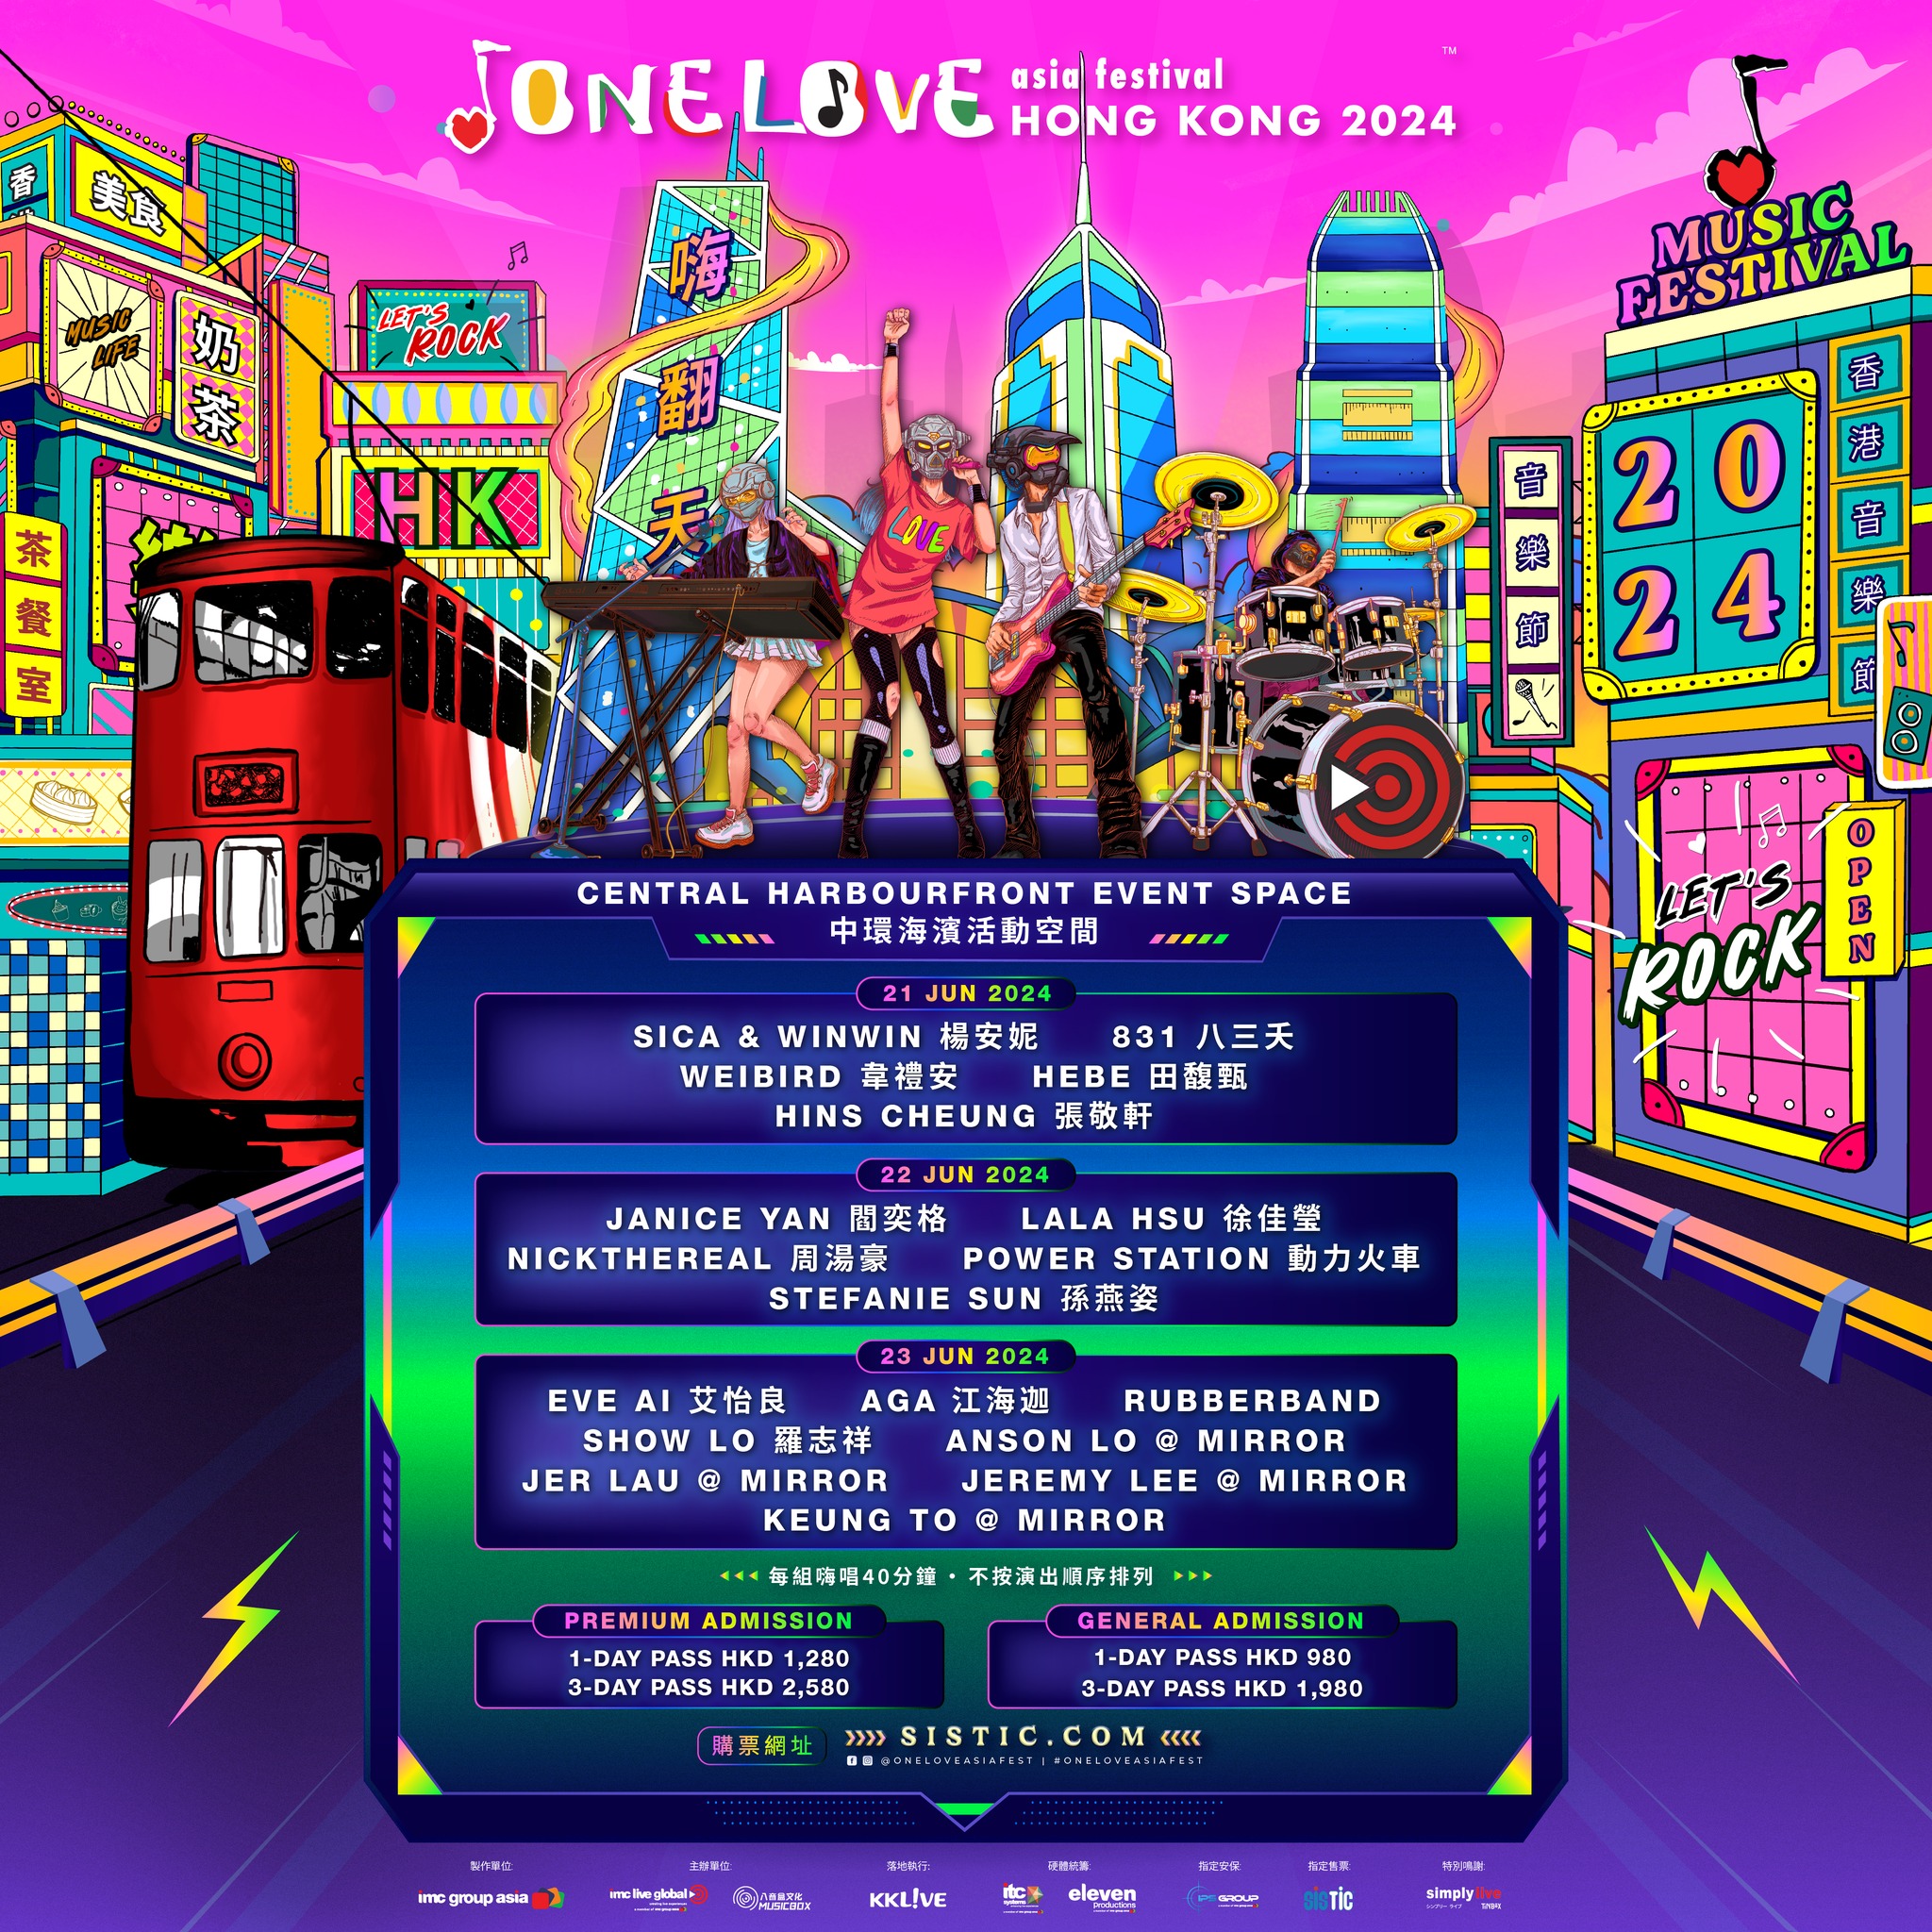 One Love Asia Festival Hong Kong 2024｜音樂節｜中環海濱活動空間